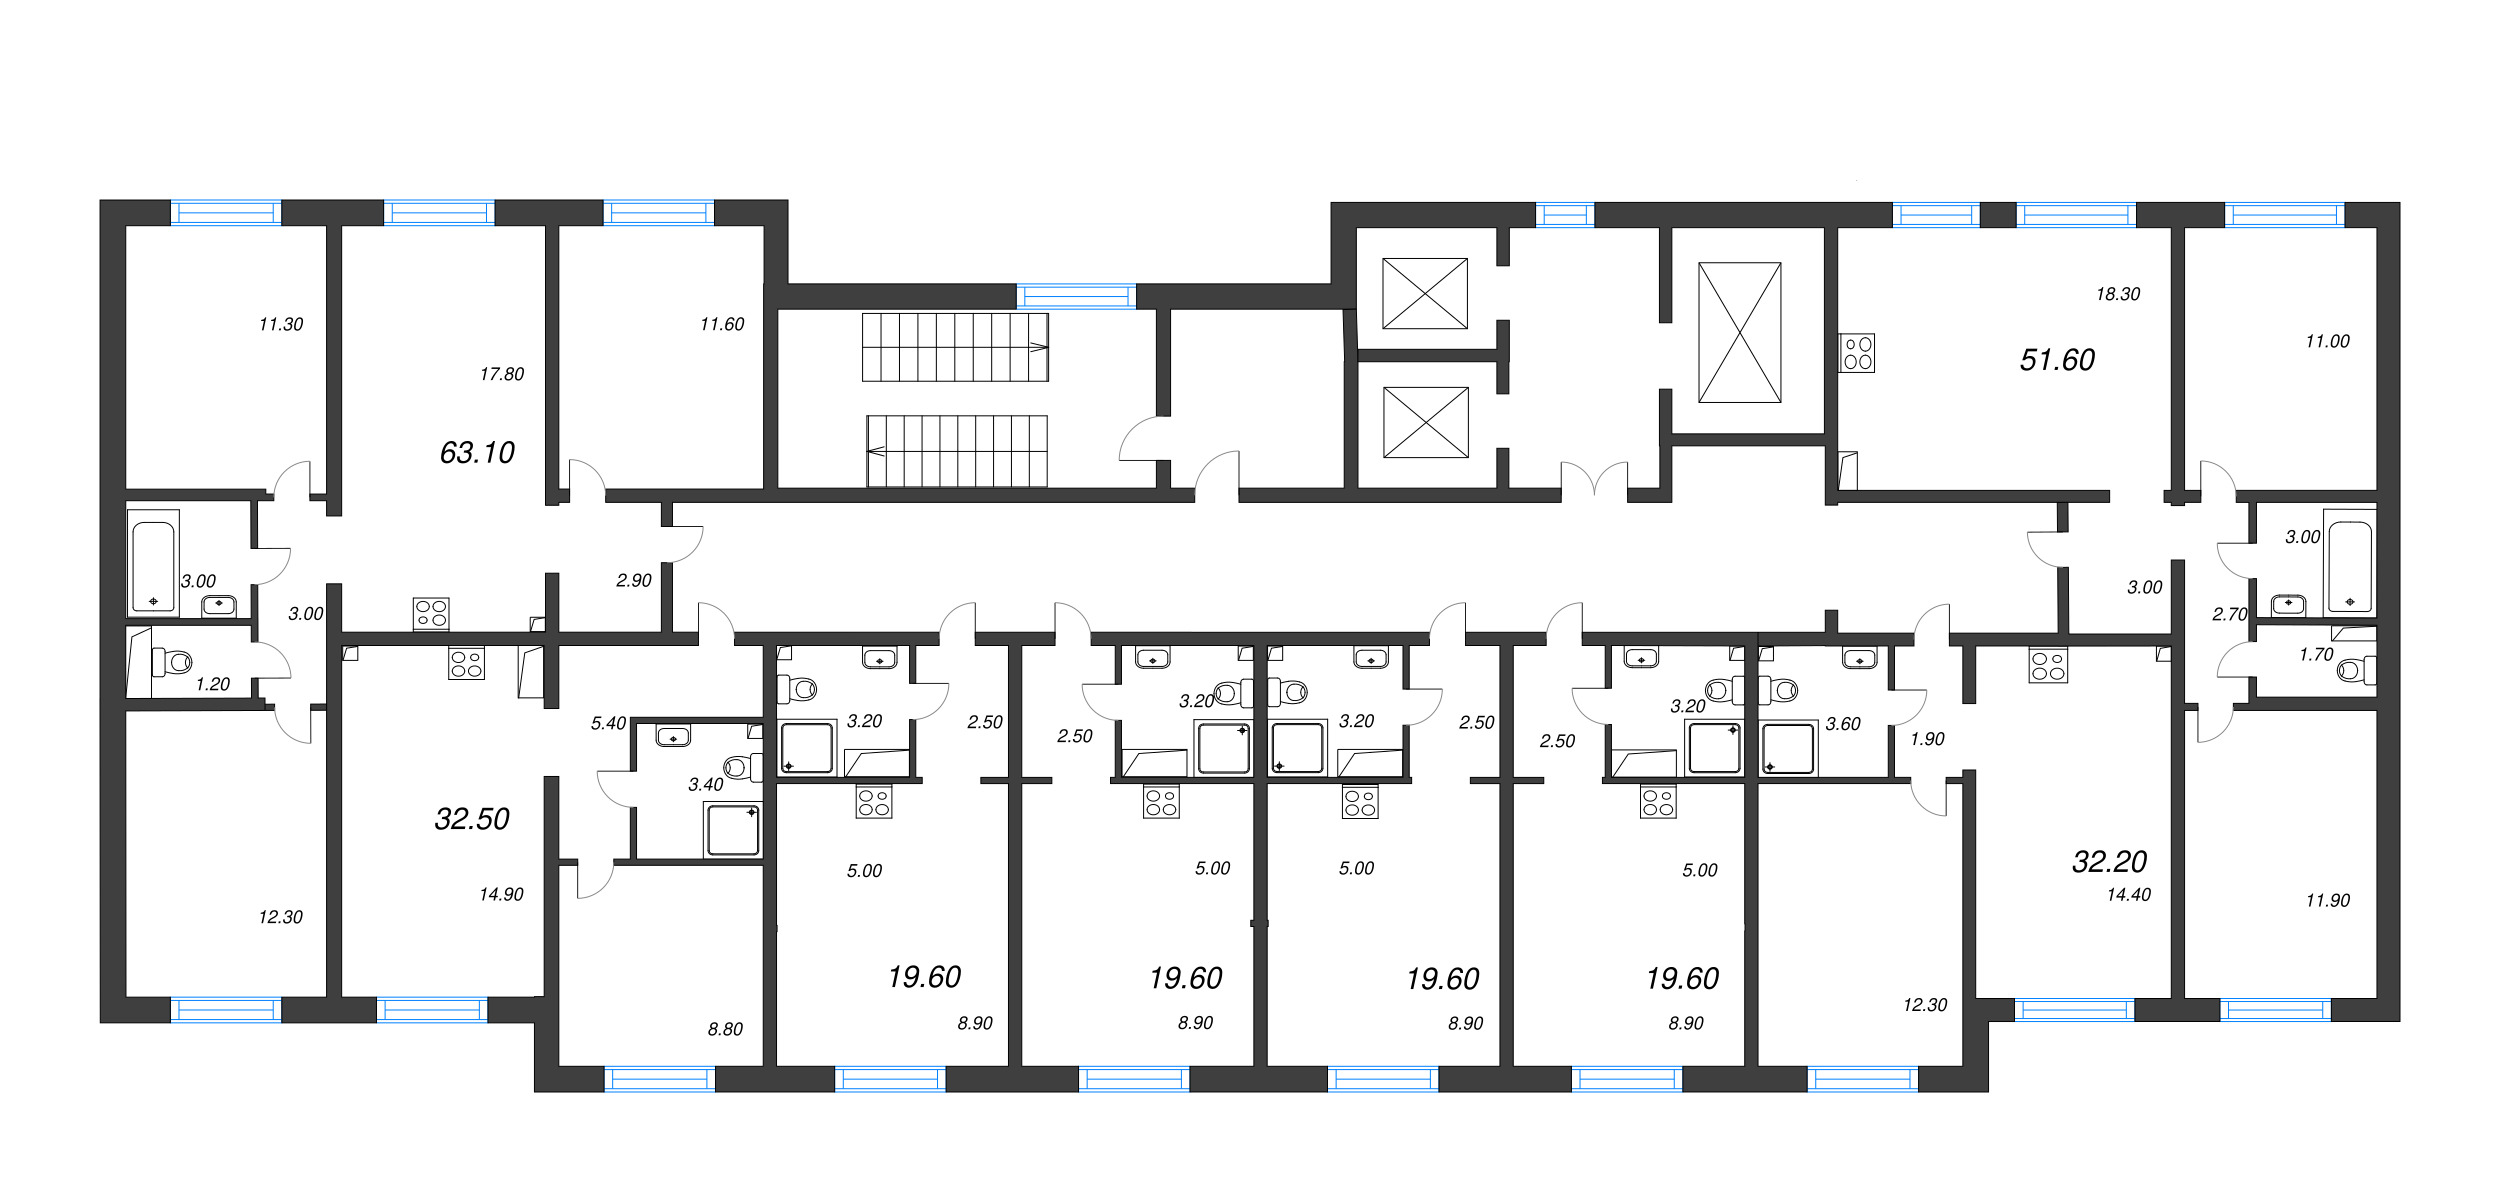 2-комнатная (Евро) квартира, 32.5 м² - планировка этажа